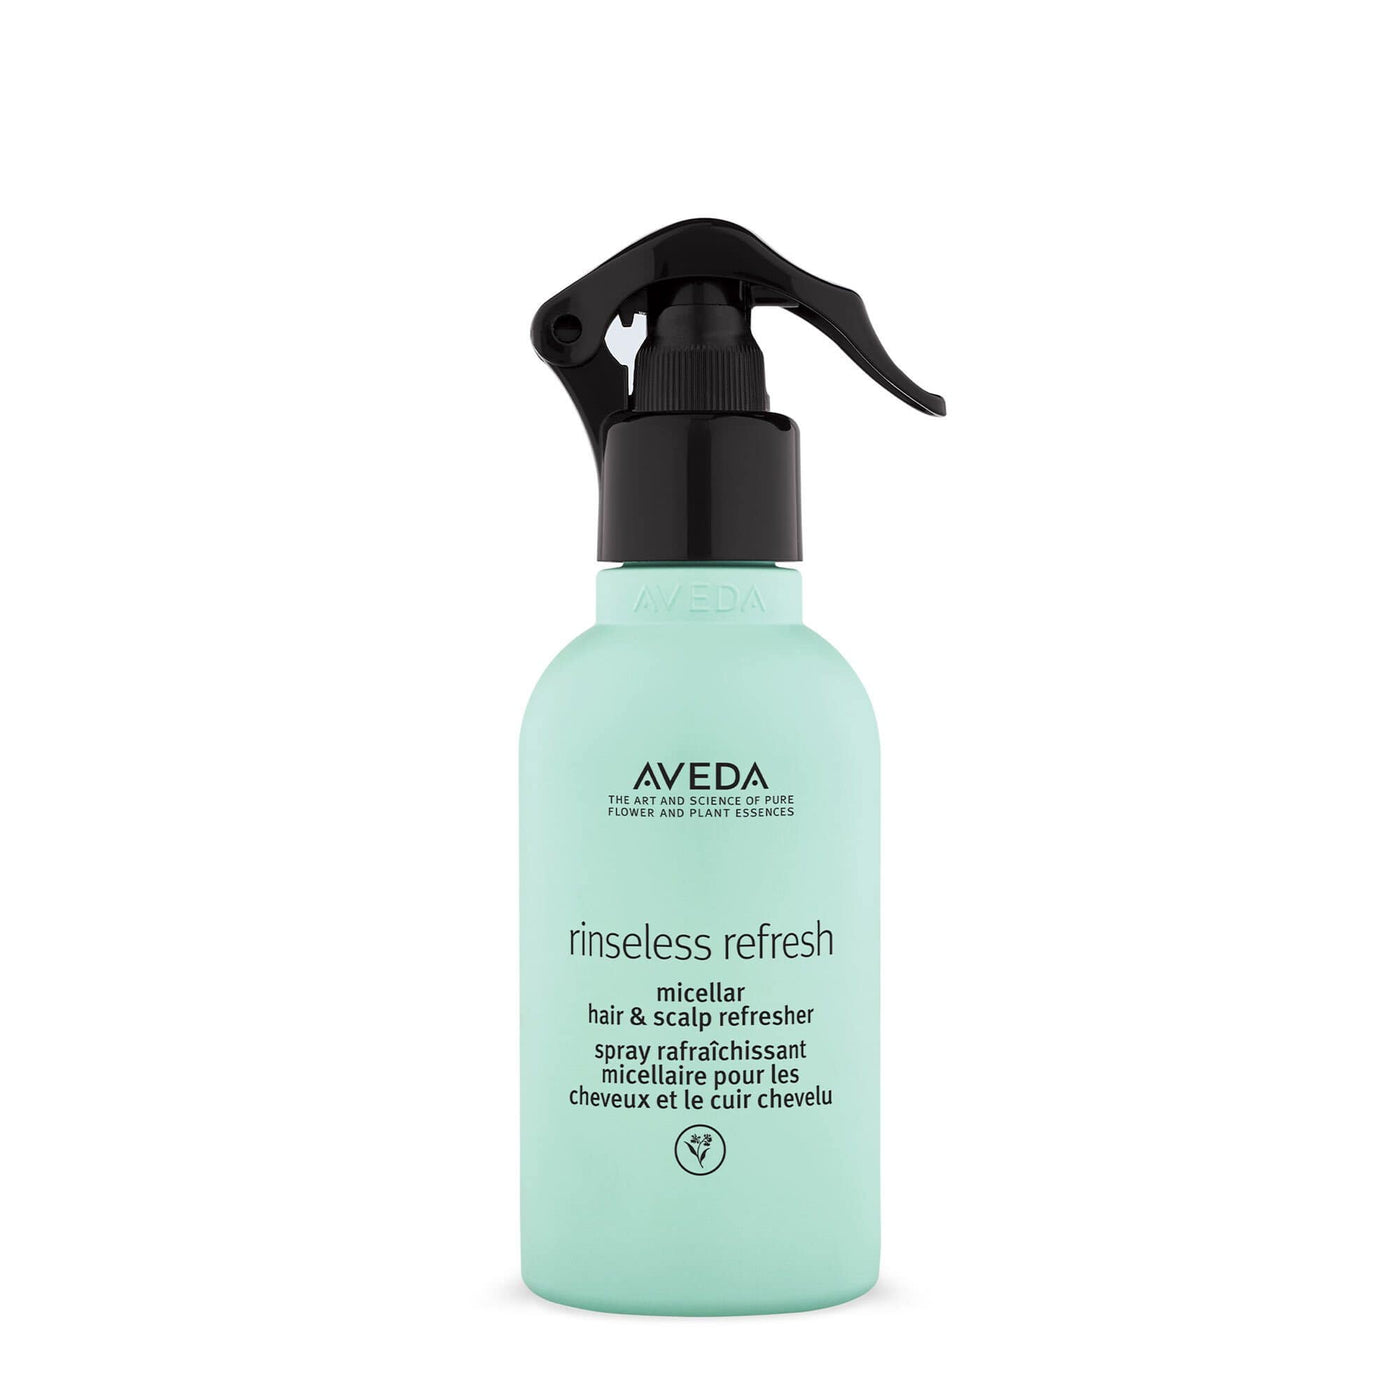 Aveda Treatment Rinseless refresh micellar hair & scalp refresher 200ml